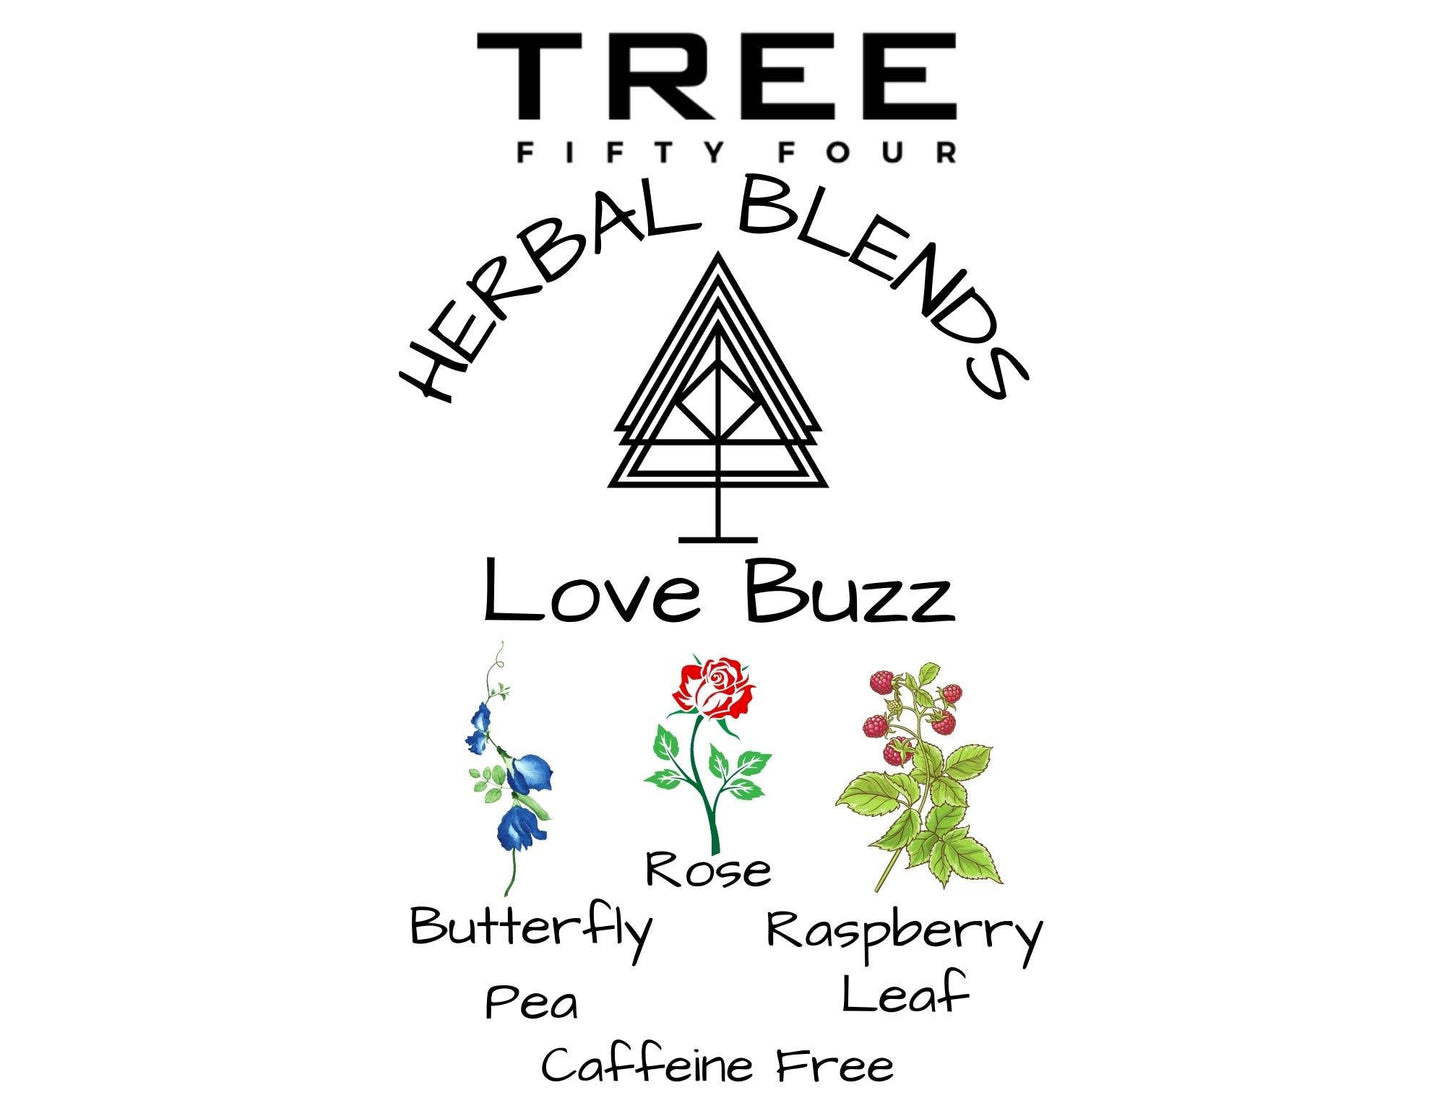 Tree Fifty Four - Love Buzz Herbal Tea Blend | Bulk Size 4, 8, 16 OZ: 8 OZ